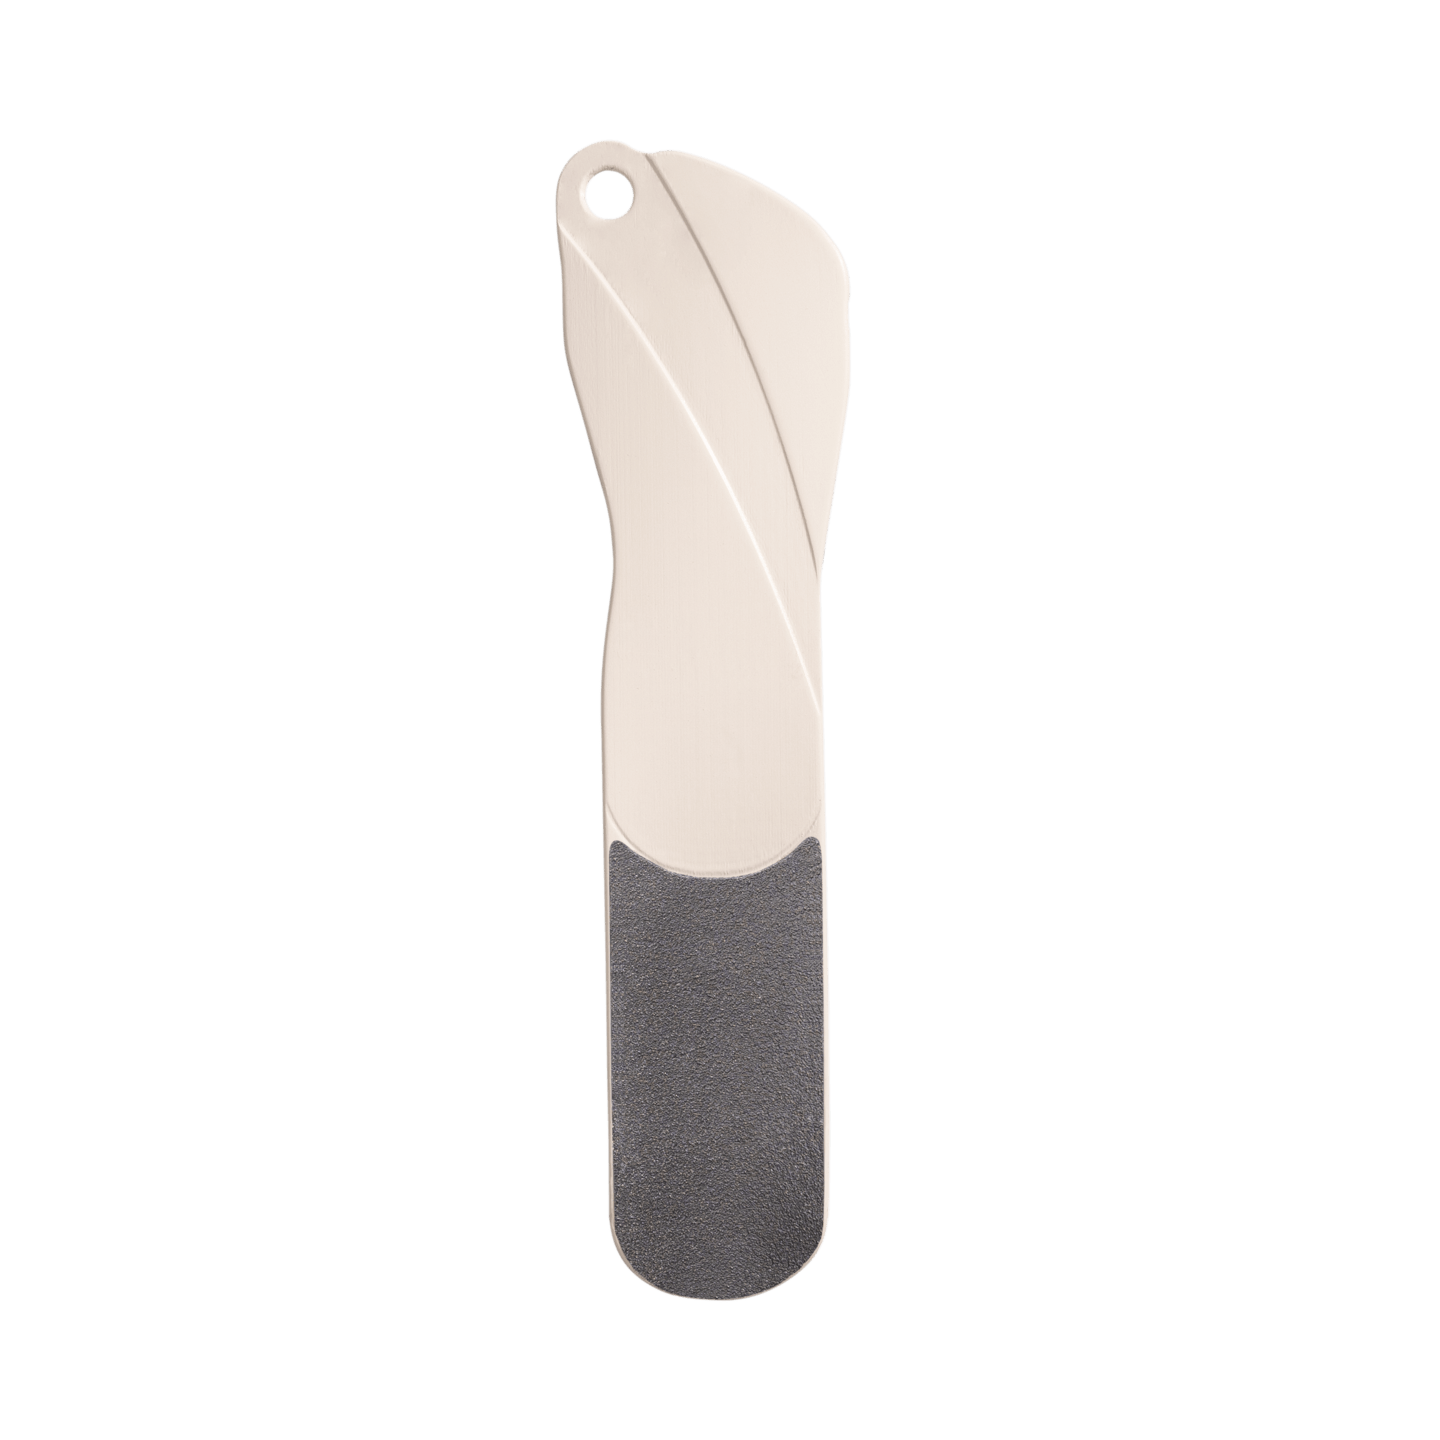 RUCK - Fußfeile, unbedruckt, Kunststoff, 20 cm in pastell sand